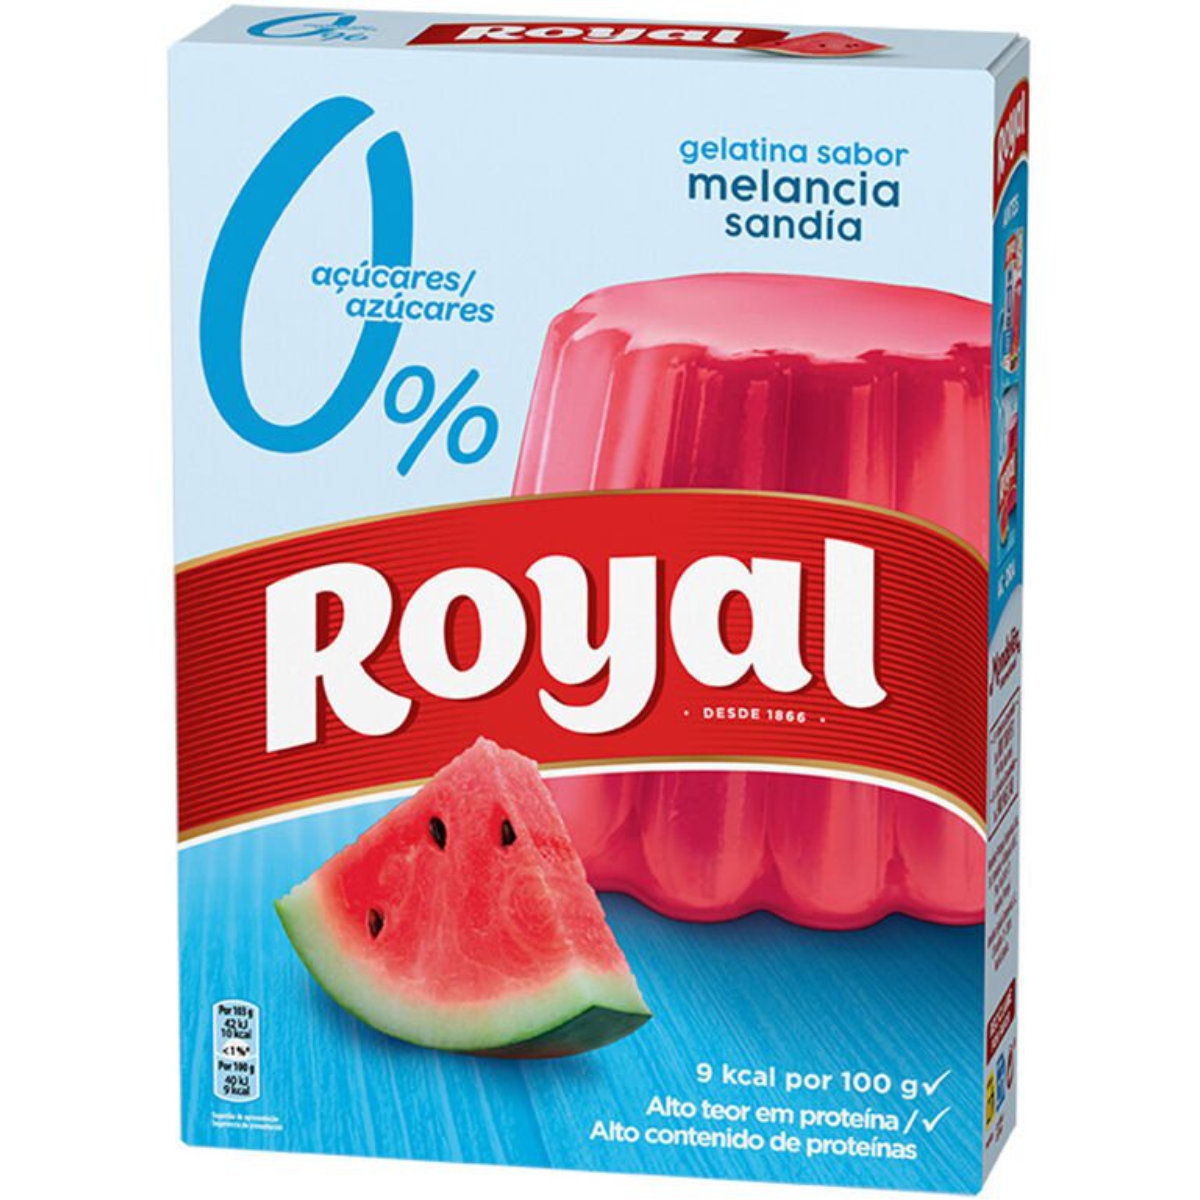 Royal gelatina sabor melancia 0% acucares – gélatine au goût de pasthèque sans sucre – 31g